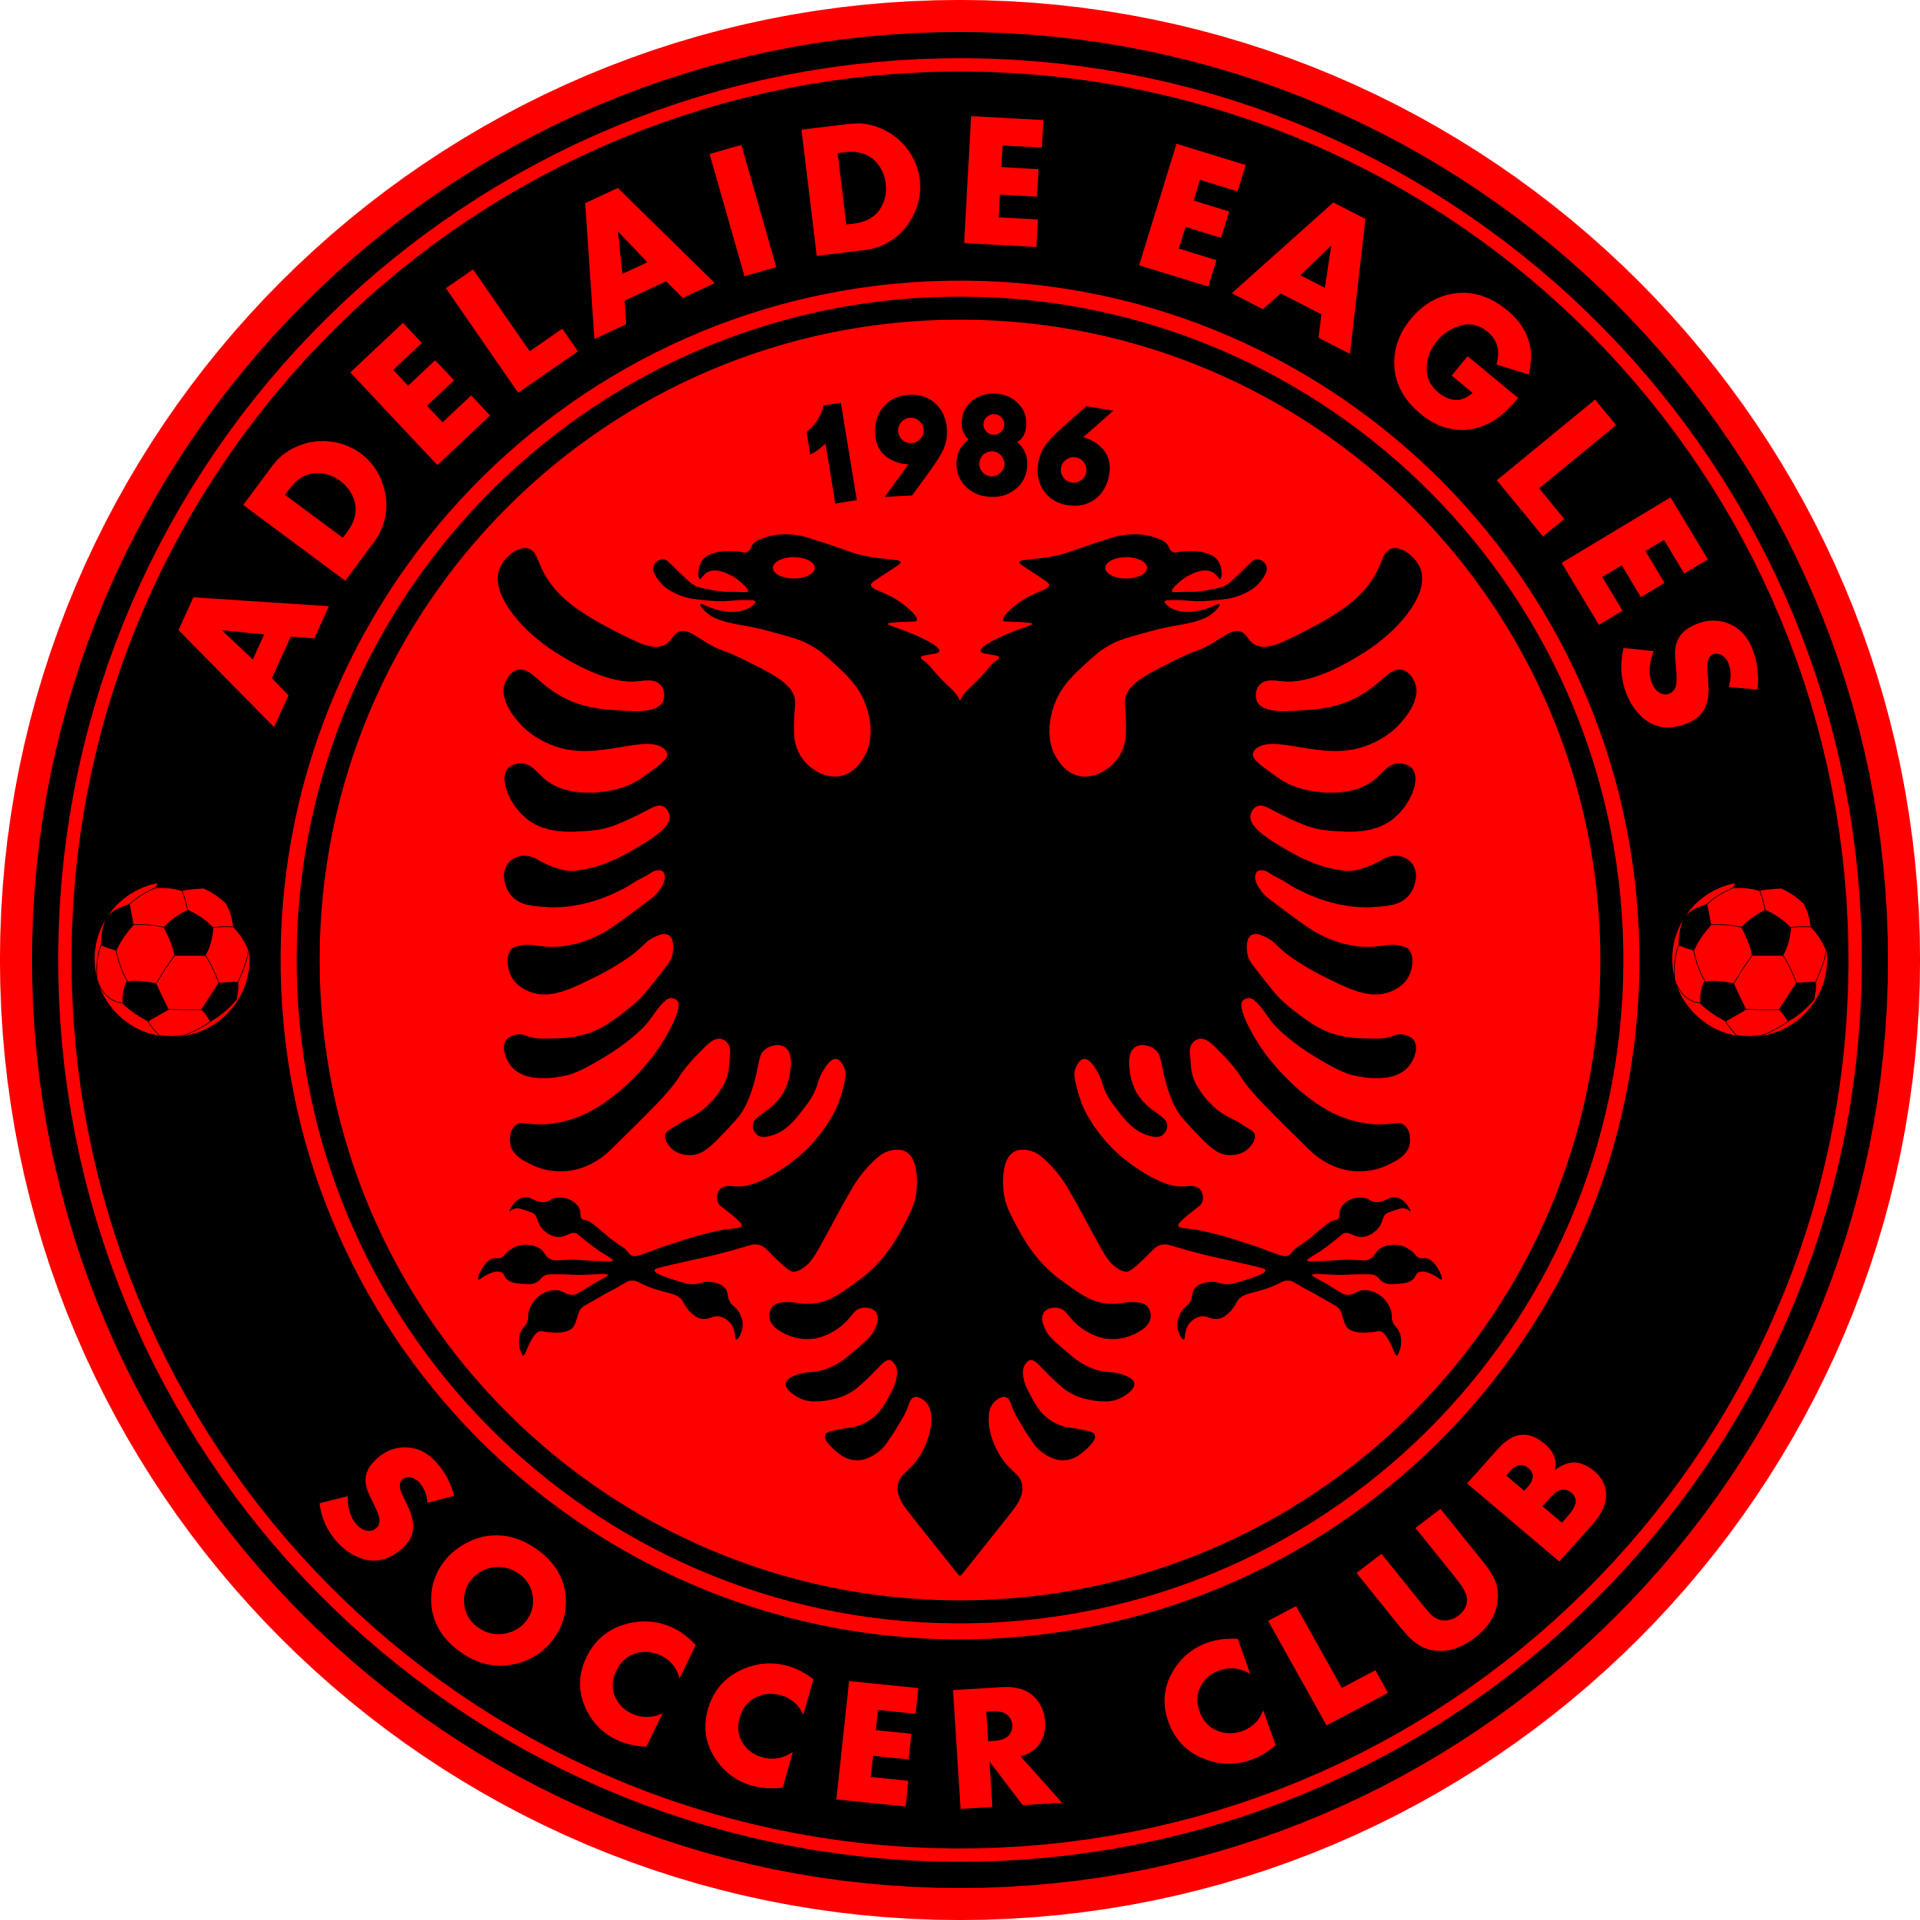 Adelaide Eagles Soccer Club